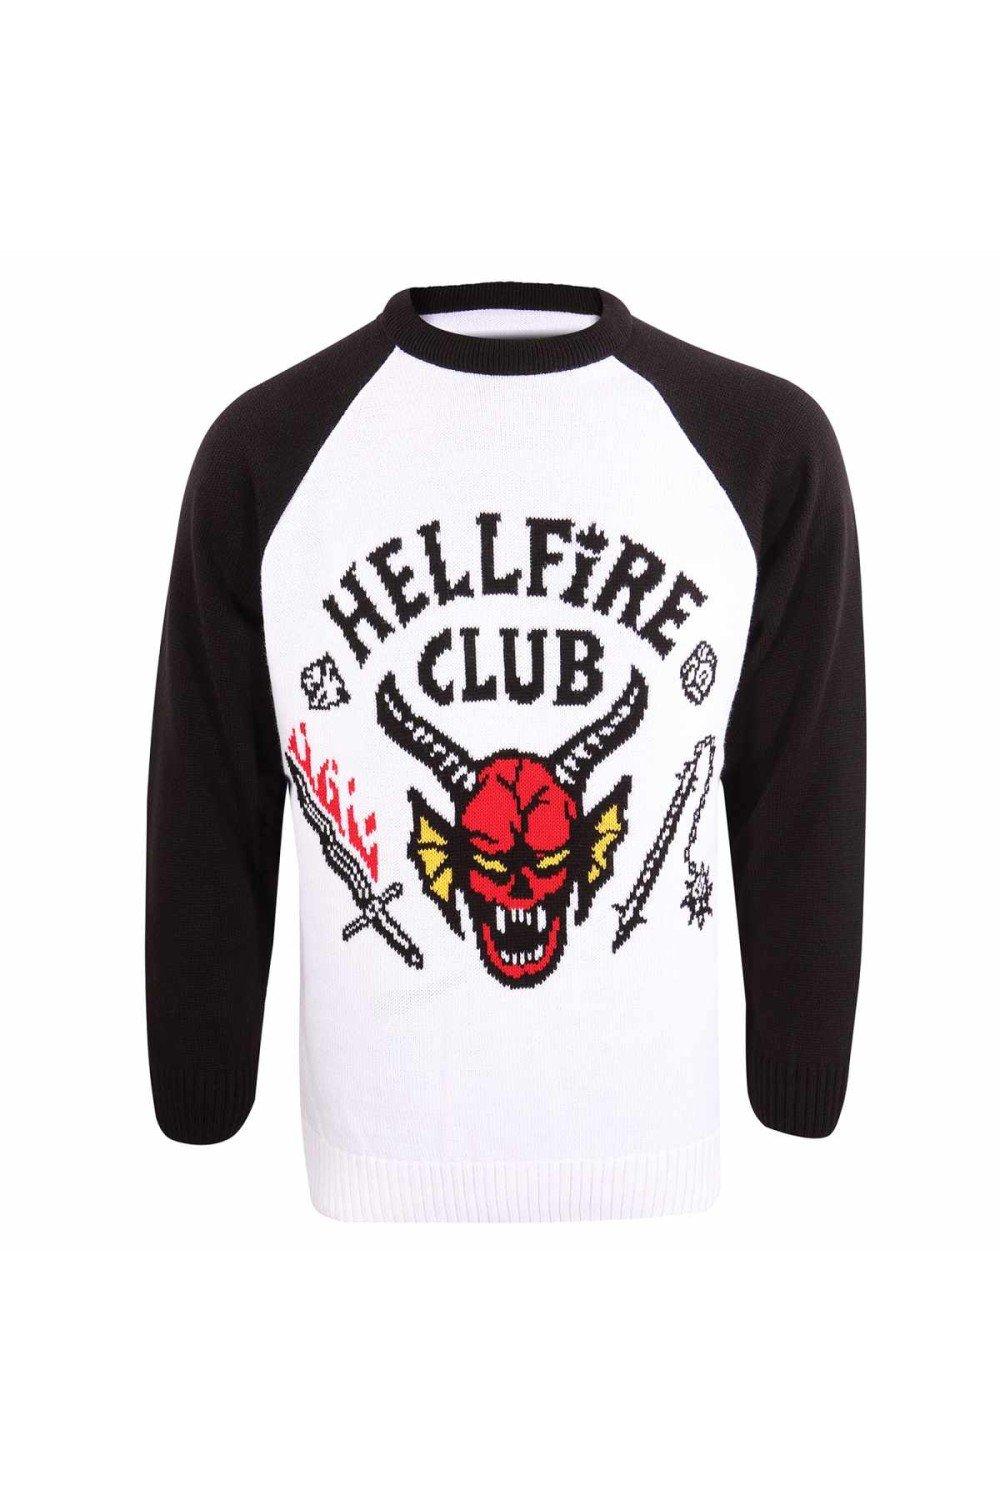 Hellfire Club Knitted Sweatshirt